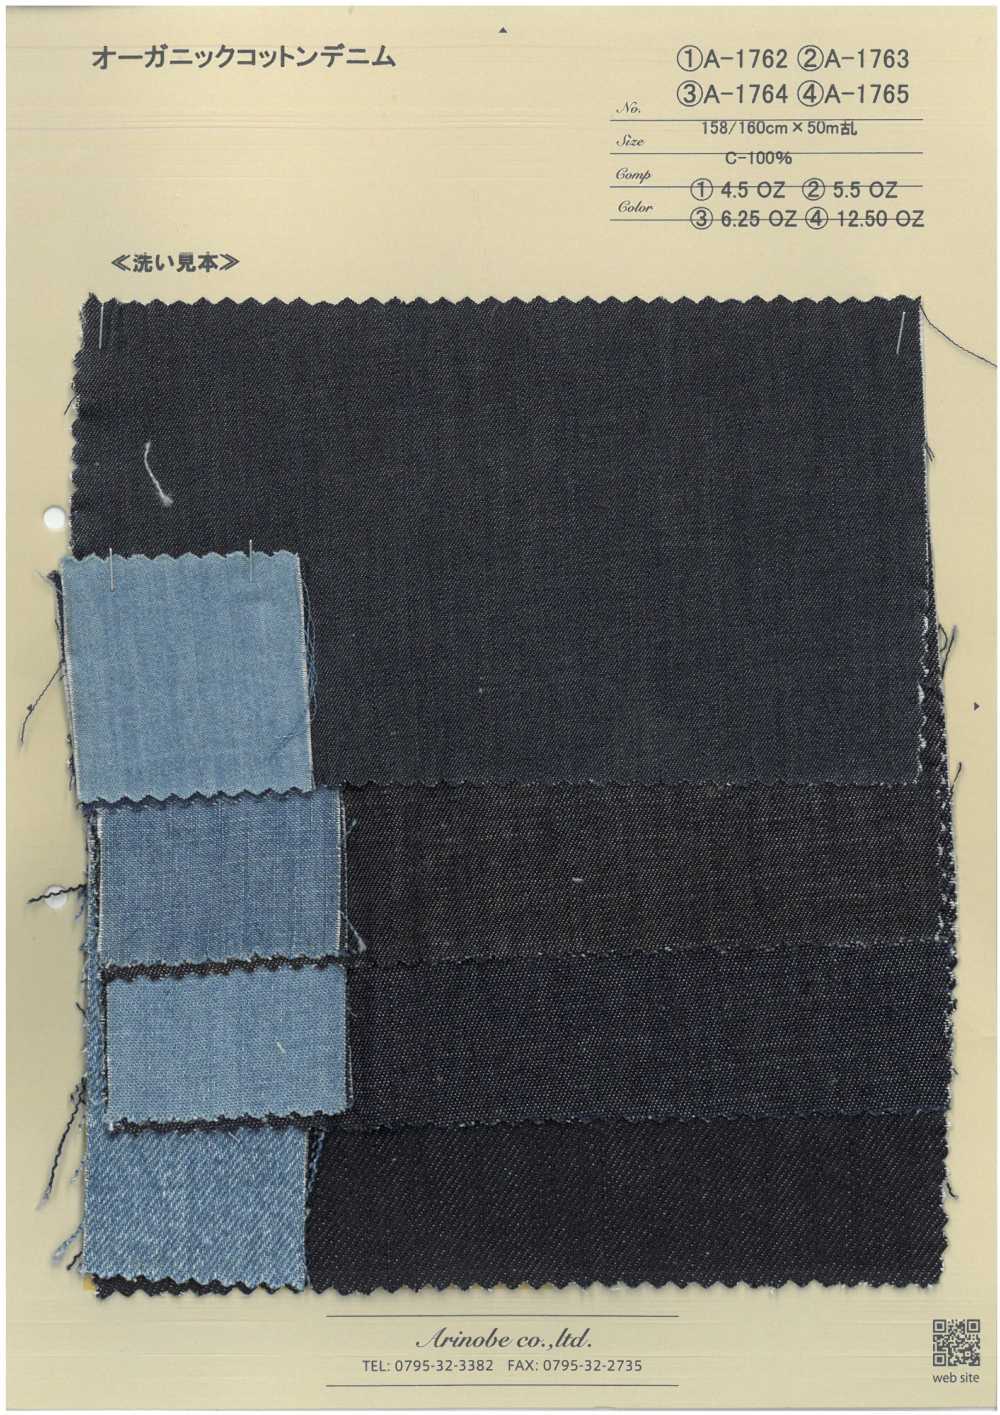 A-1765 Jean En Coton Biologique[Fabrication De Textile] ARINOBE CO., LTD.